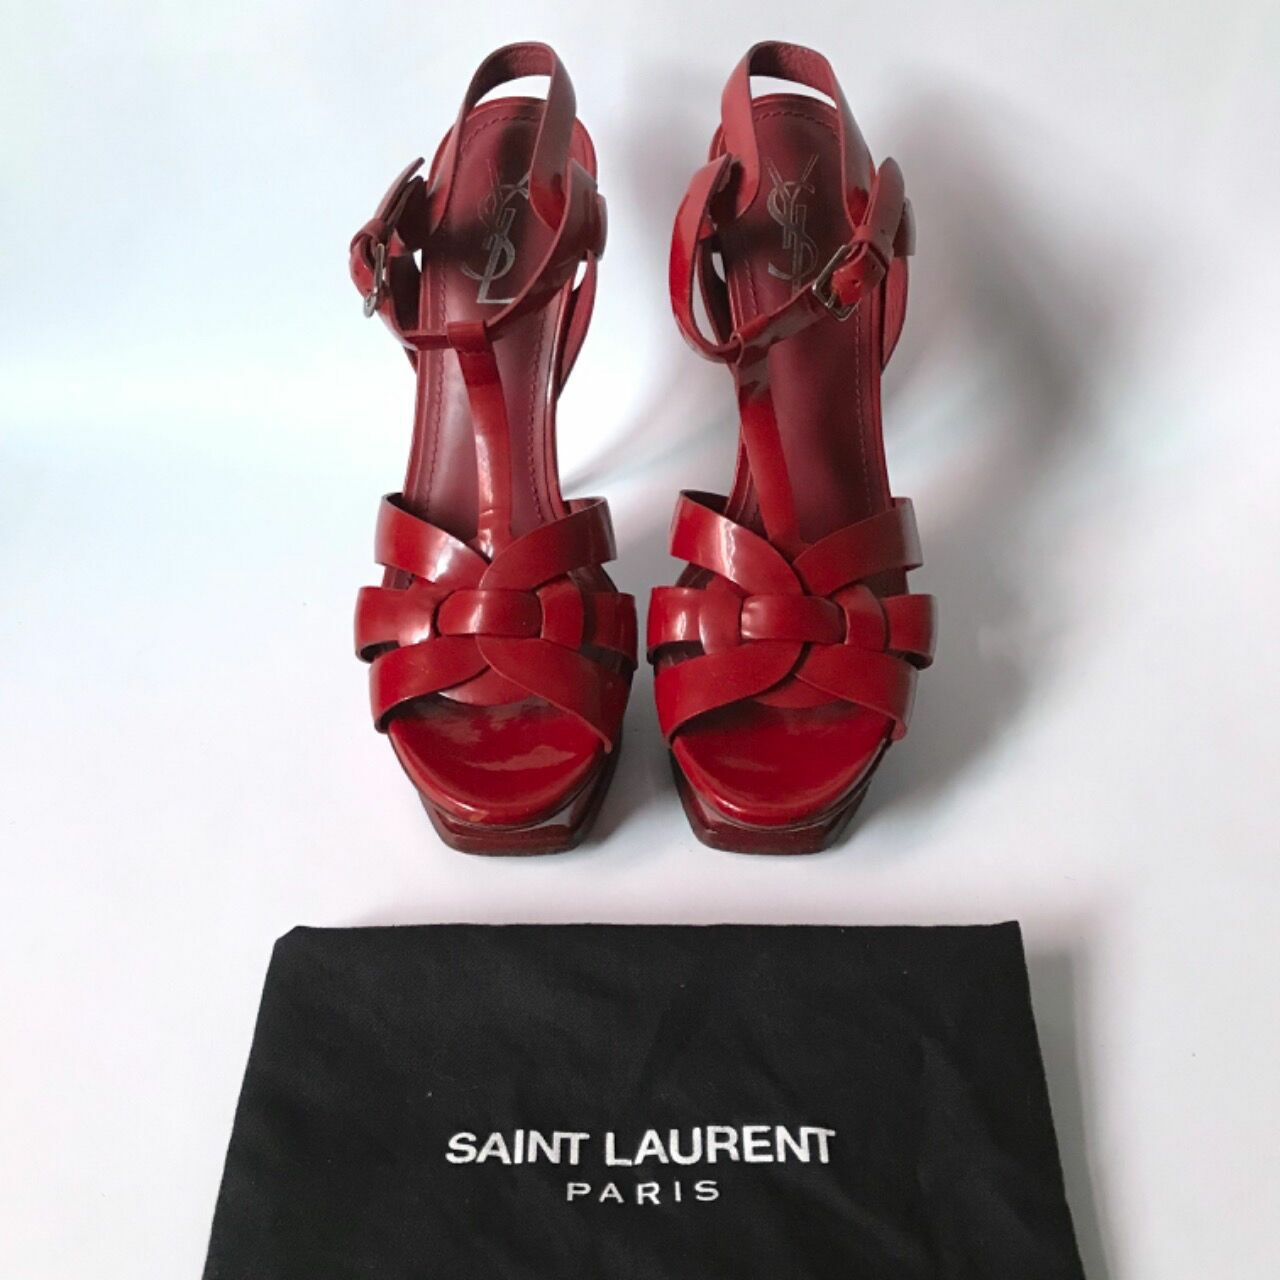 Yves Saint Laurent Tribute 140 Heels